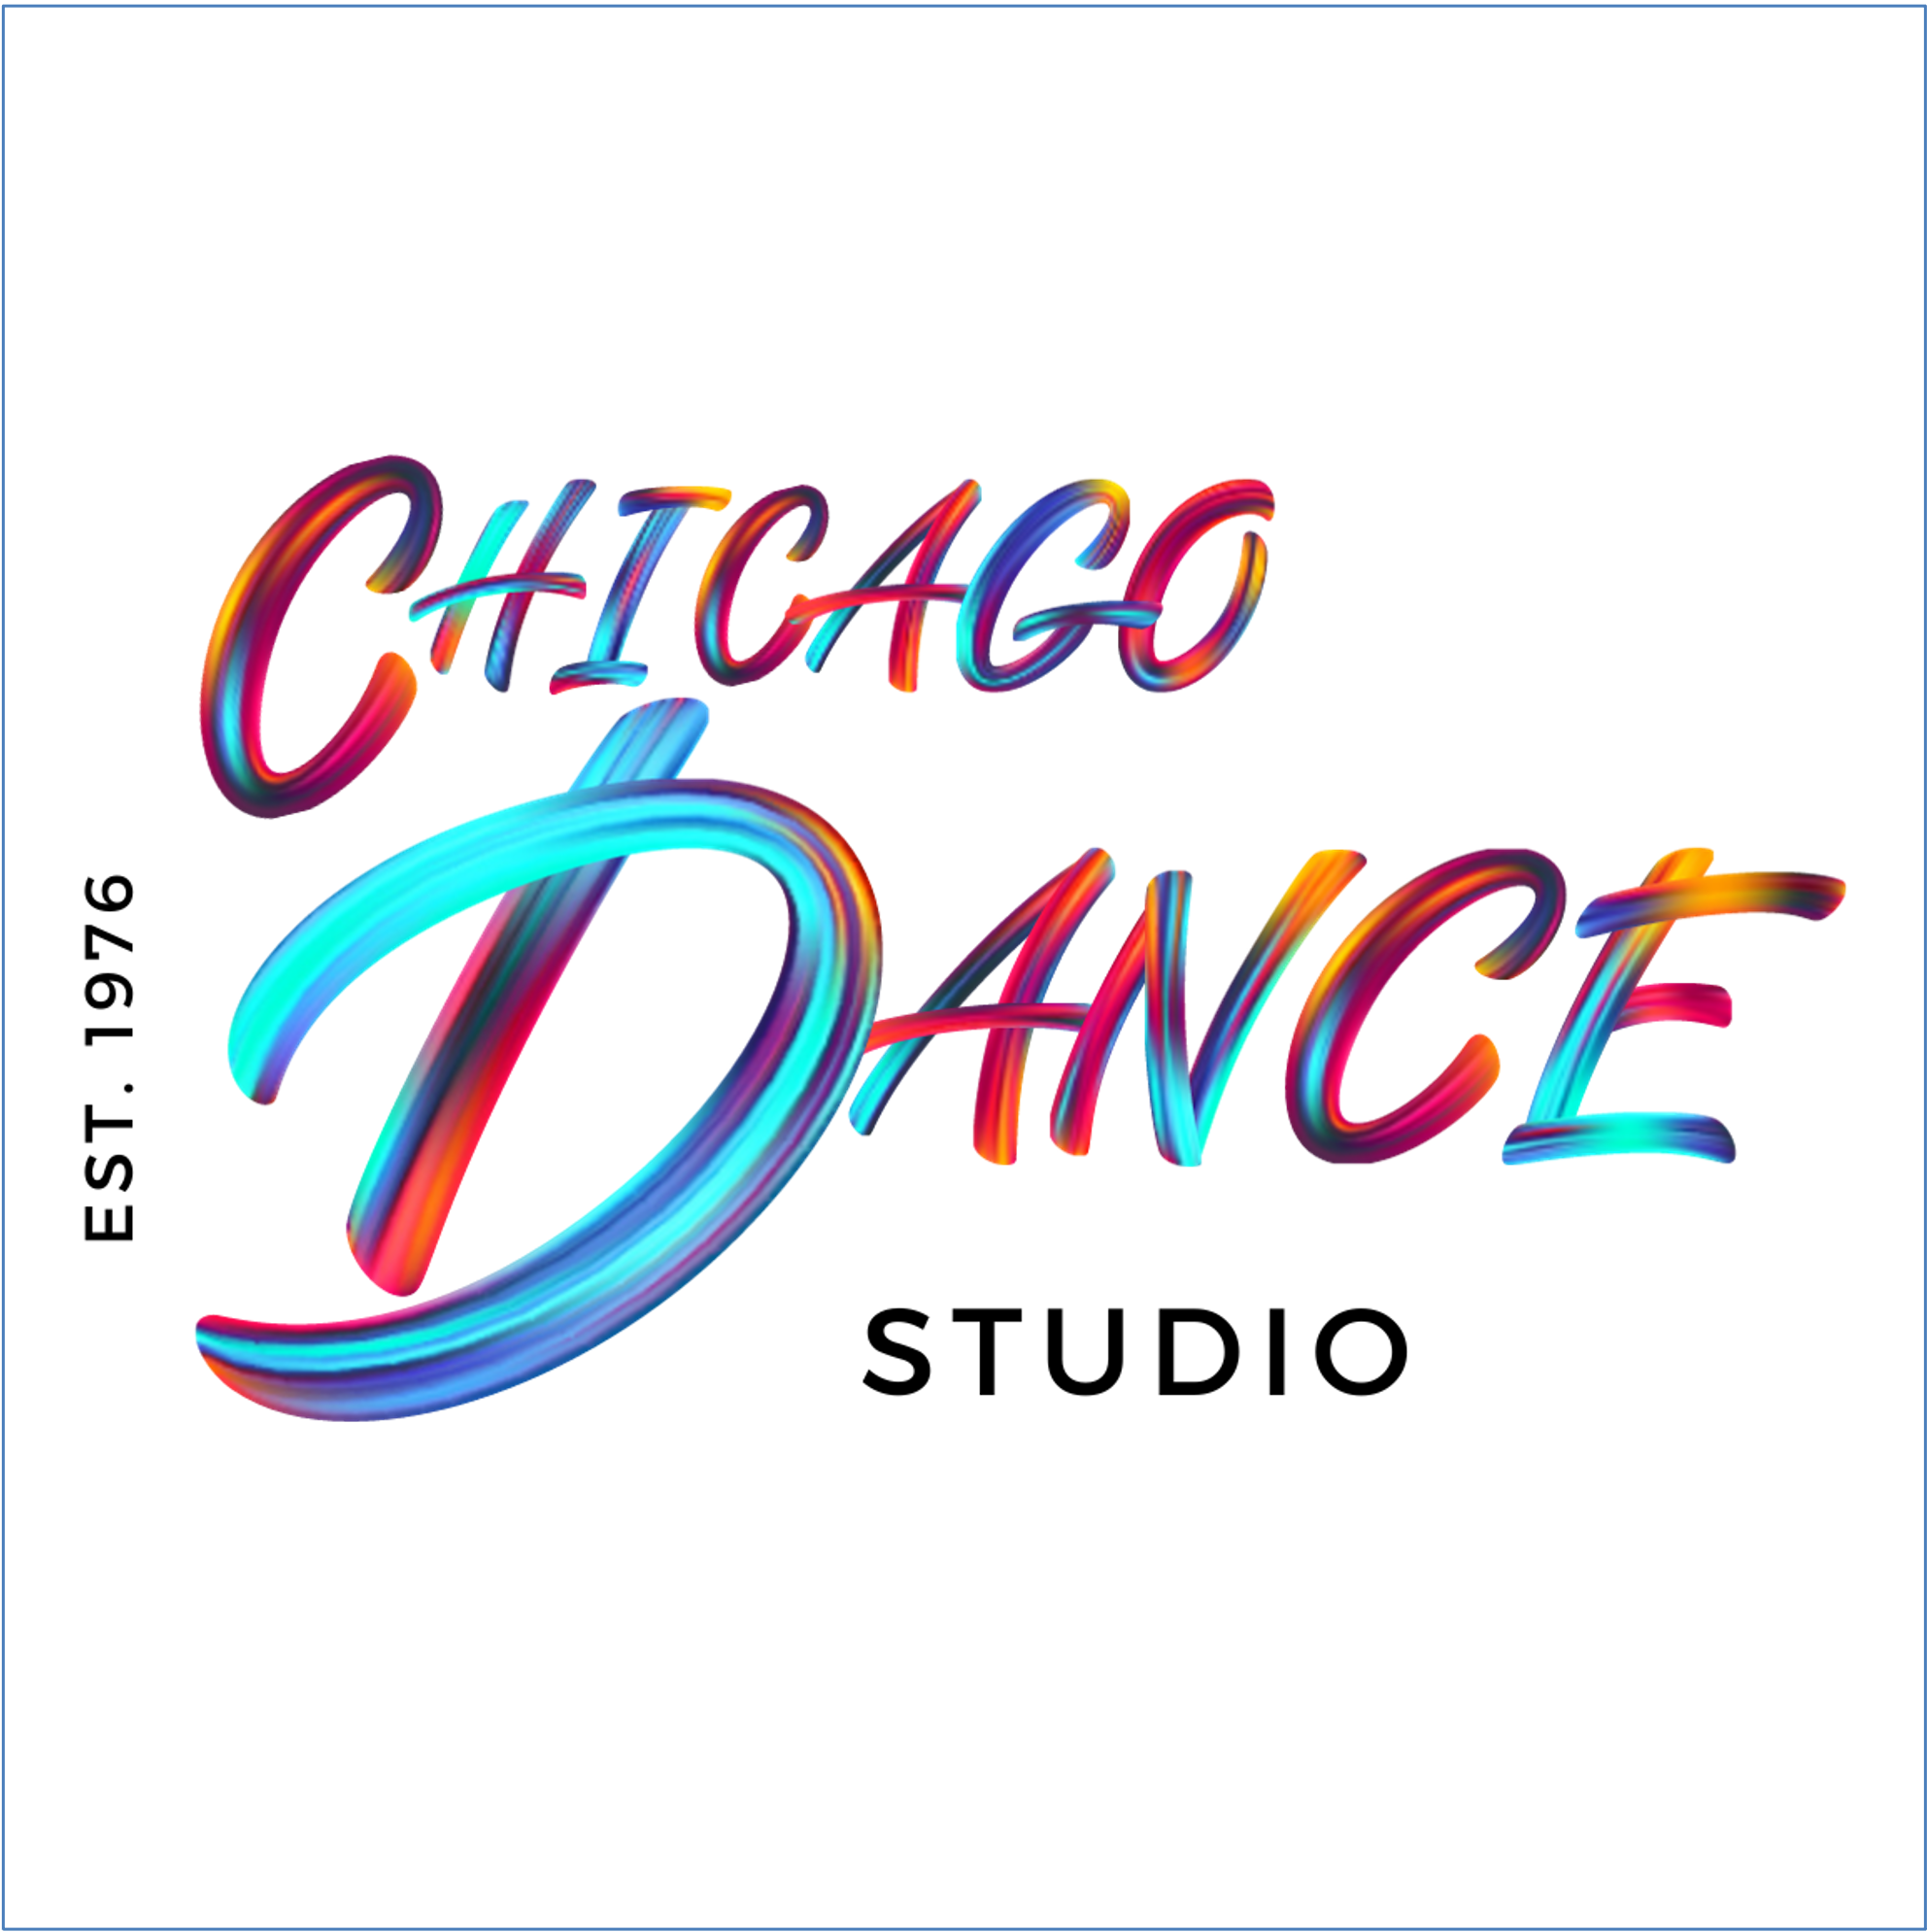 Chicago Dance Studio